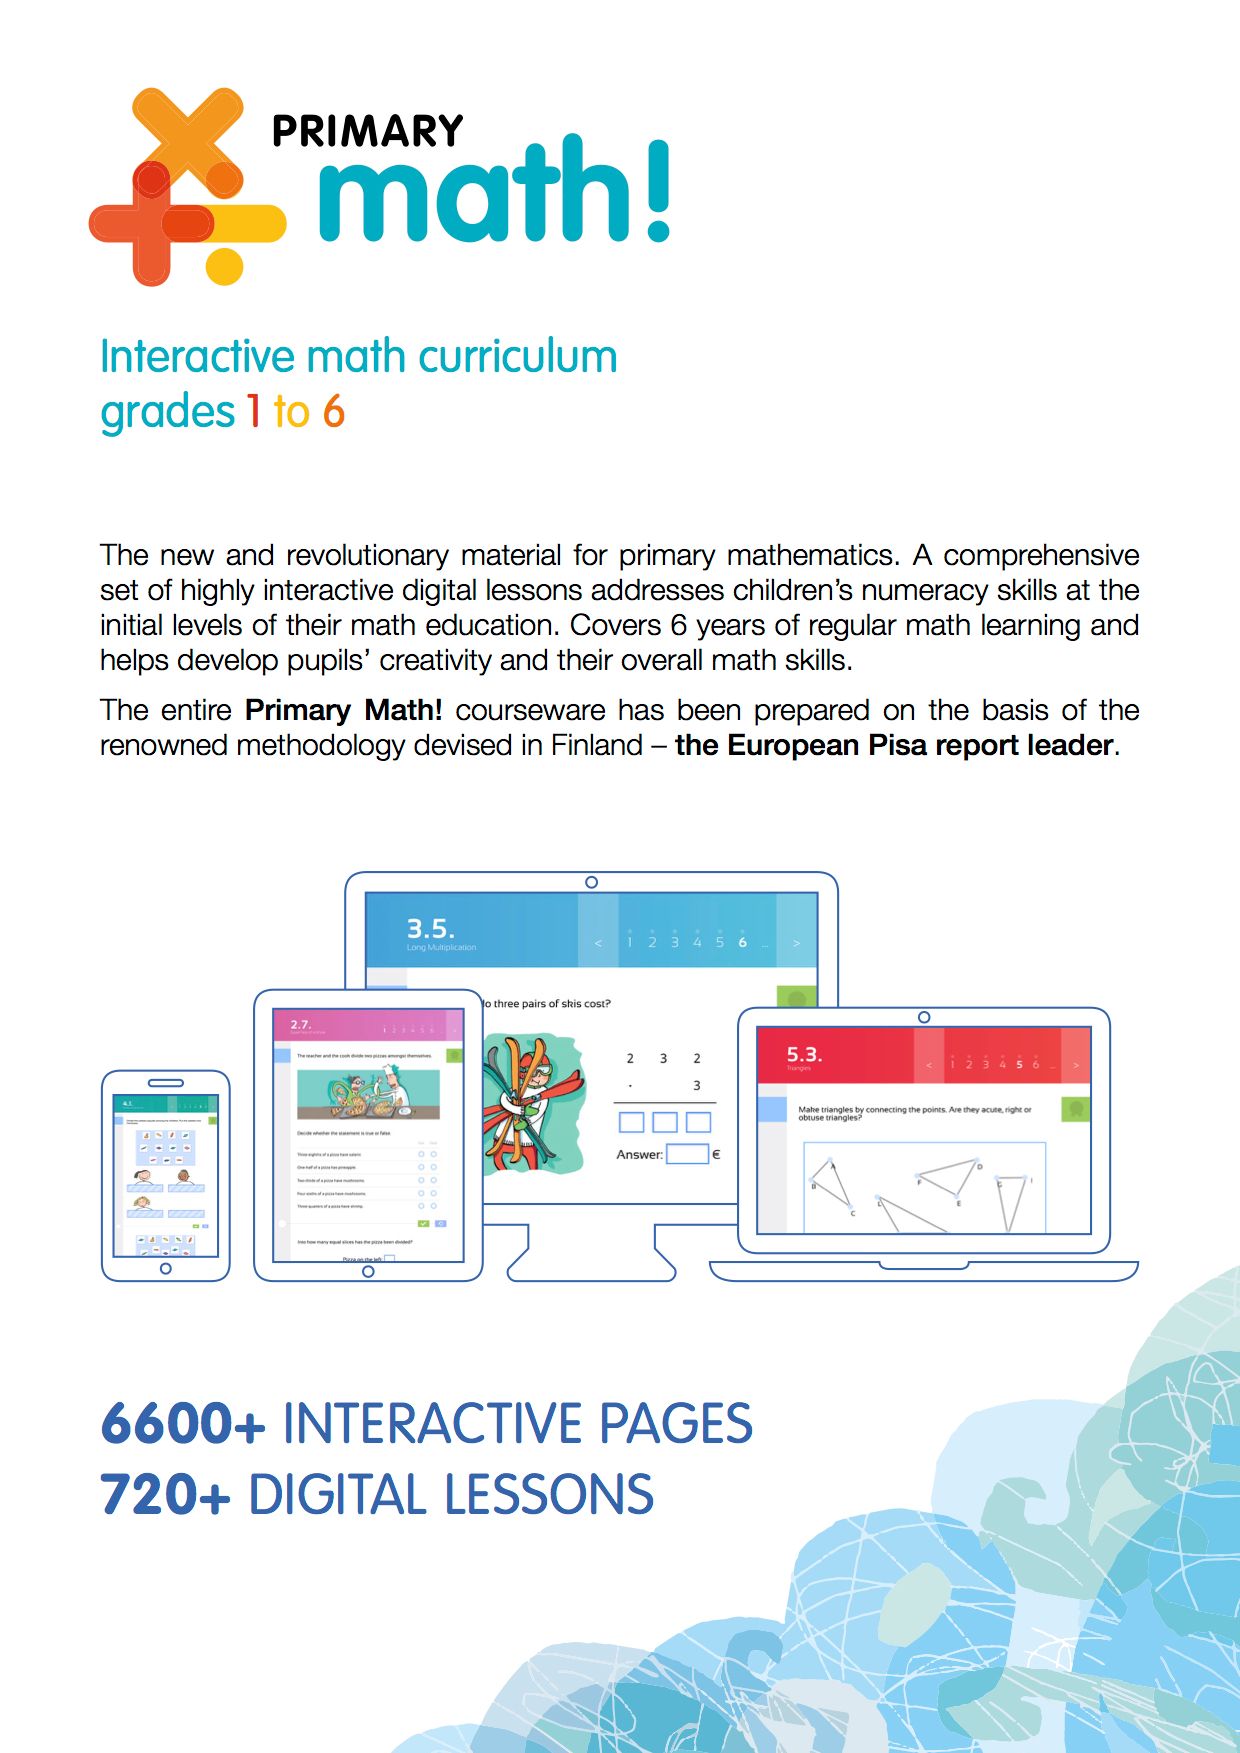 PrimaryMath! leaflet: Interactive Math Curriculum for Grades 1-6